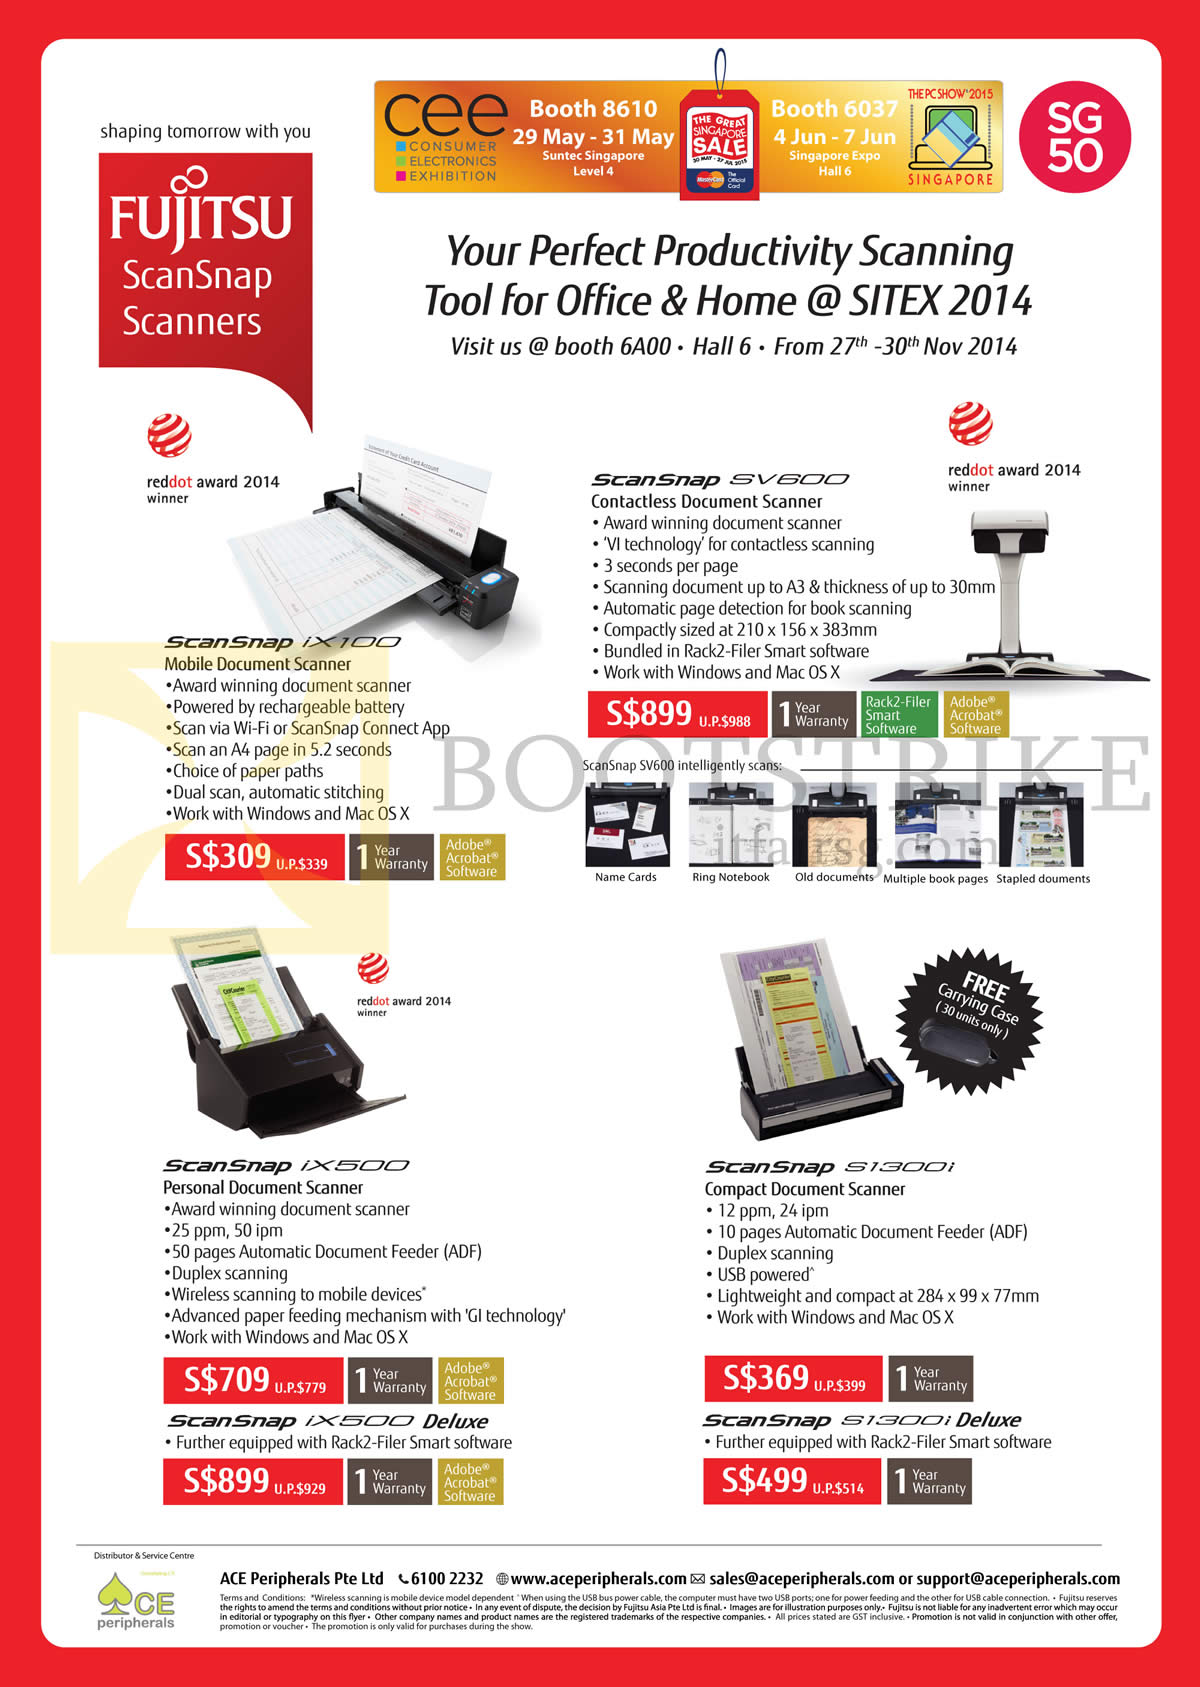 PC SHOW 2015 price list image brochure of Ace Peripherals Fujitsu ScanSnap Scanners IX100 SV600 IX500 S1300i